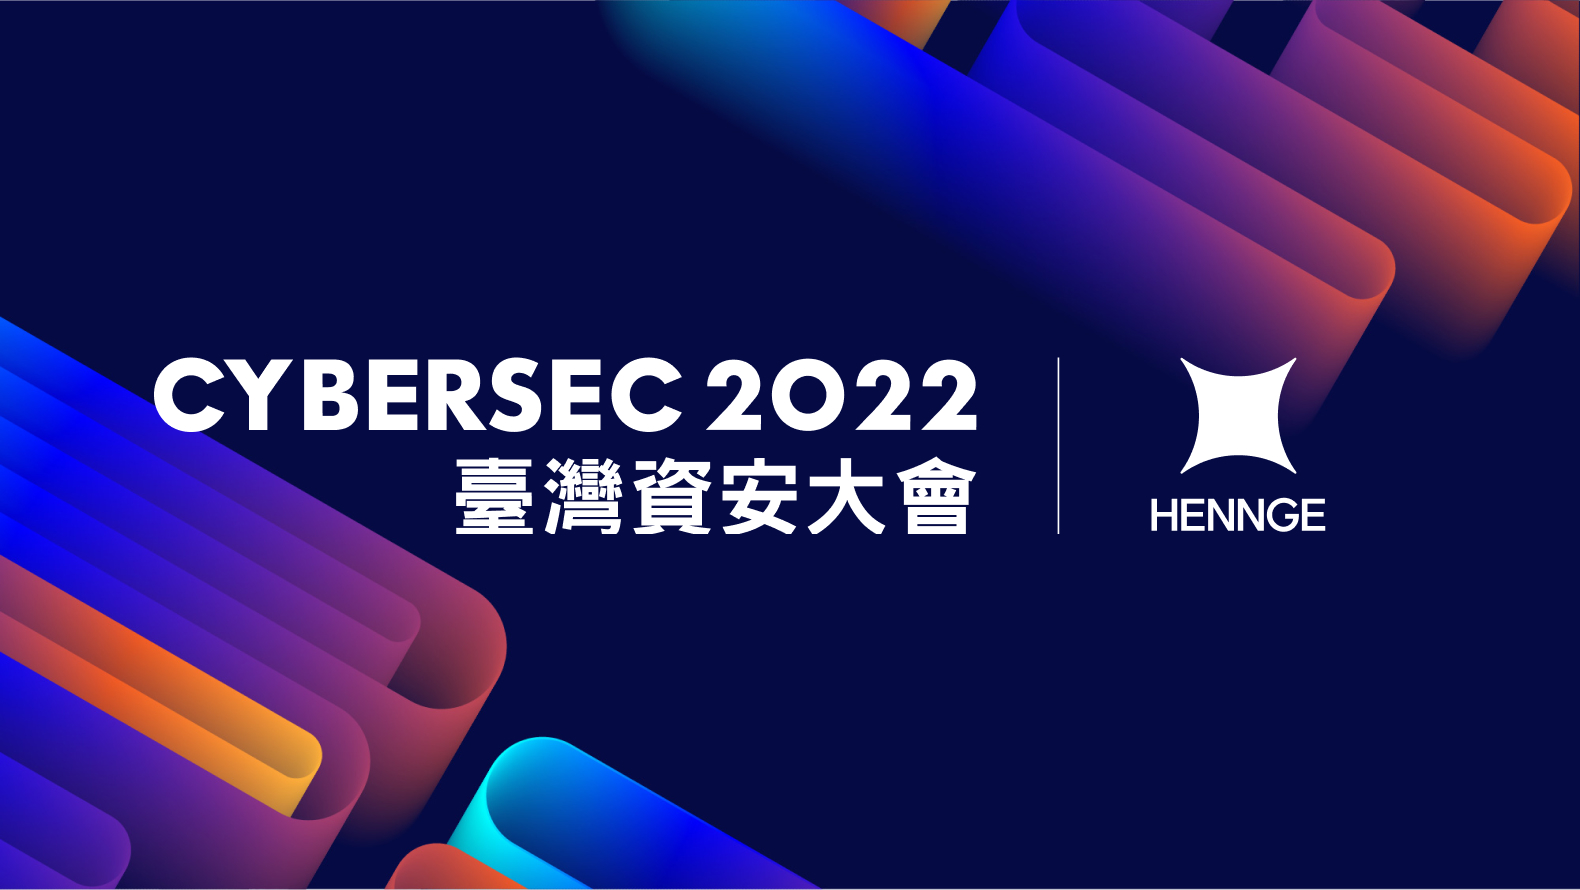 HENNGE 成為 2022 臺灣資安大會白金級贊助商